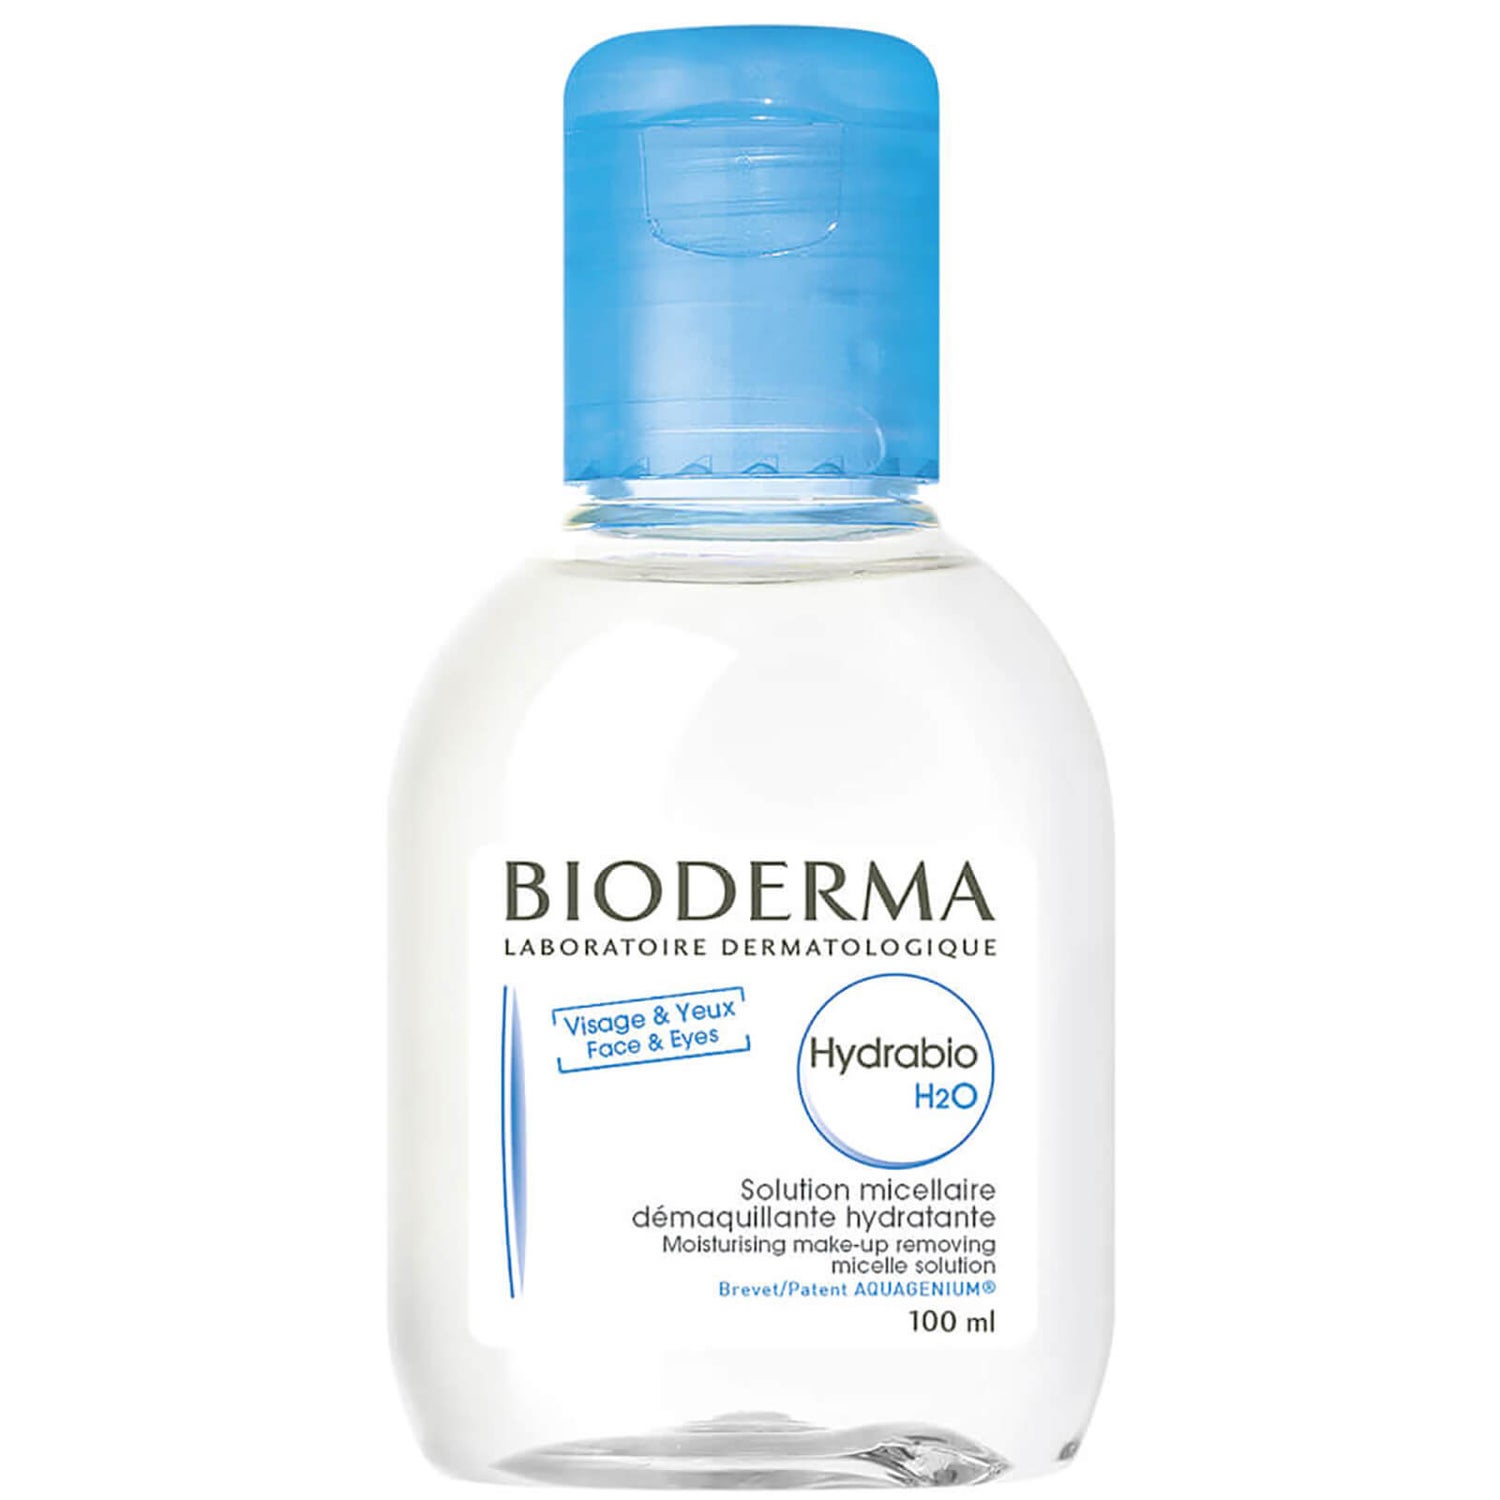 Bioderma Hydrabio hydrating micellar water 100ML